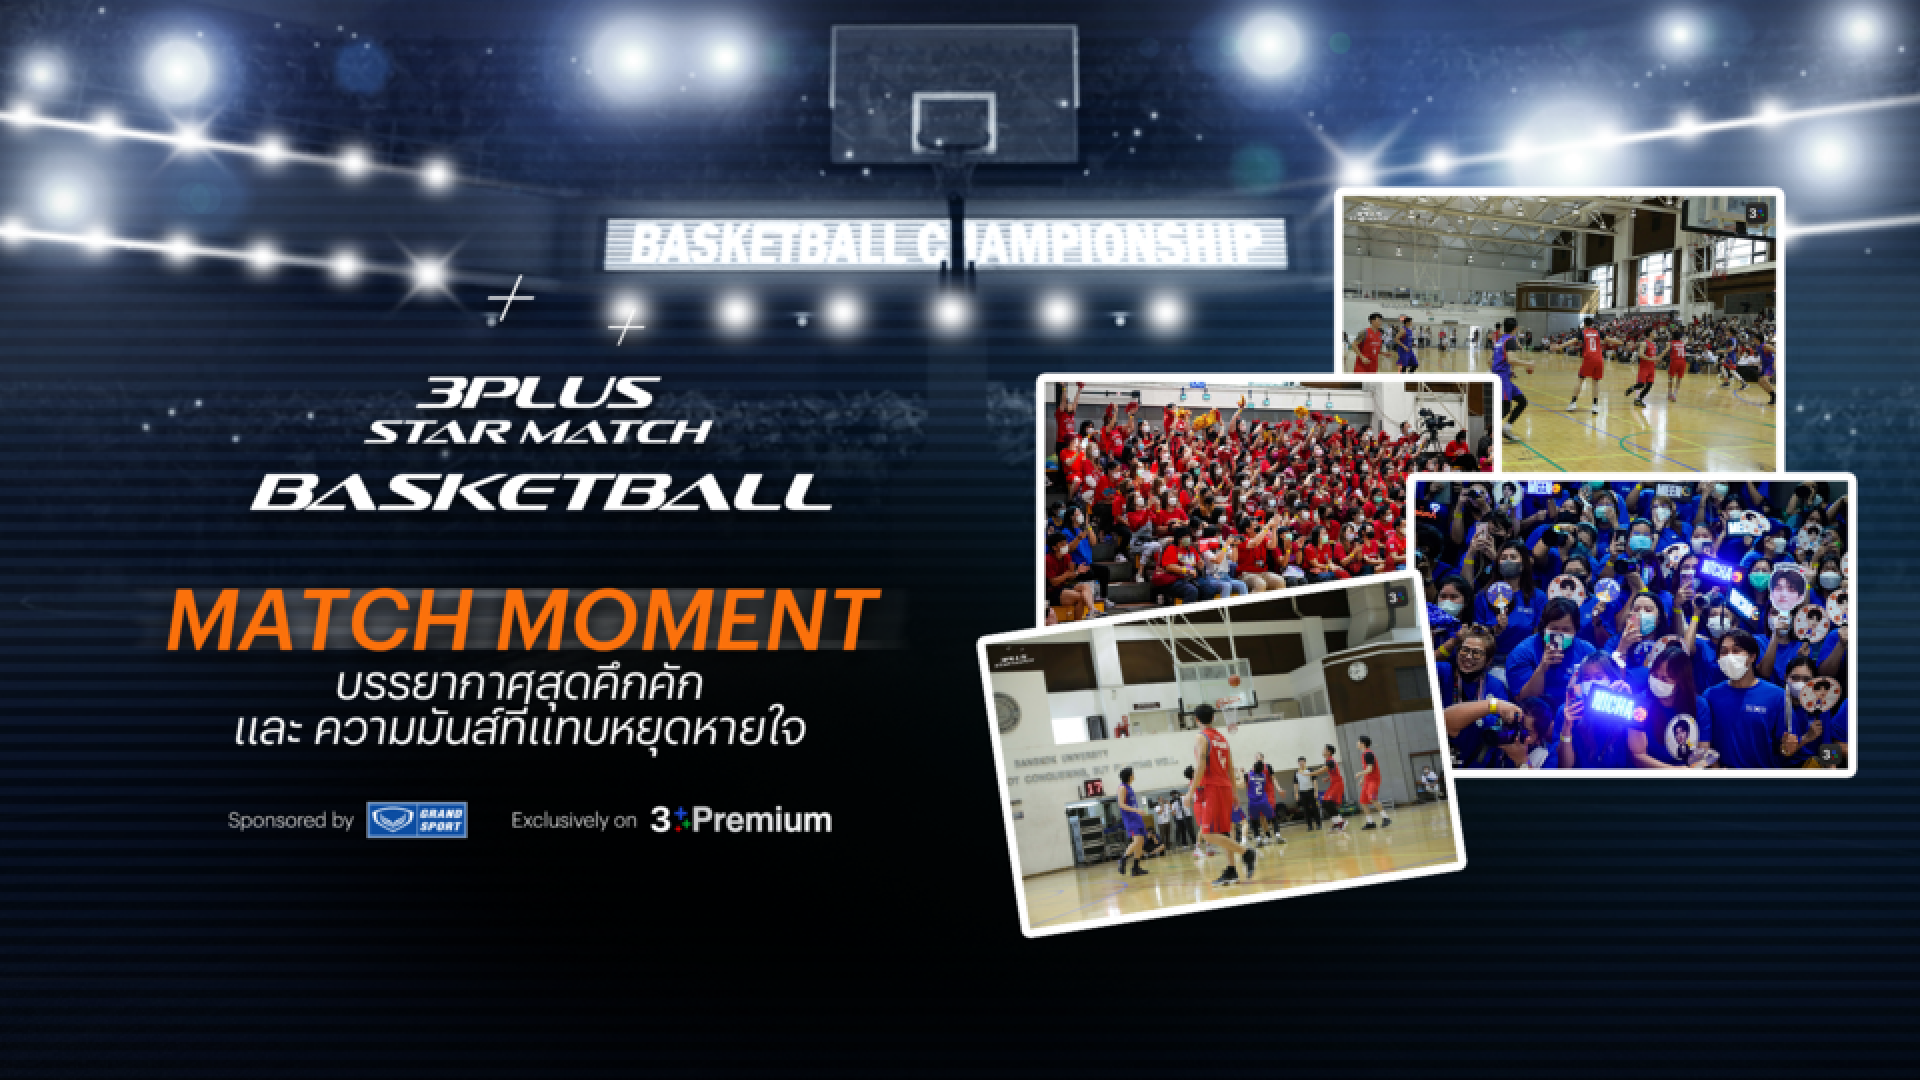 3Plus Star Match : Basketball Gallery : Match Moment